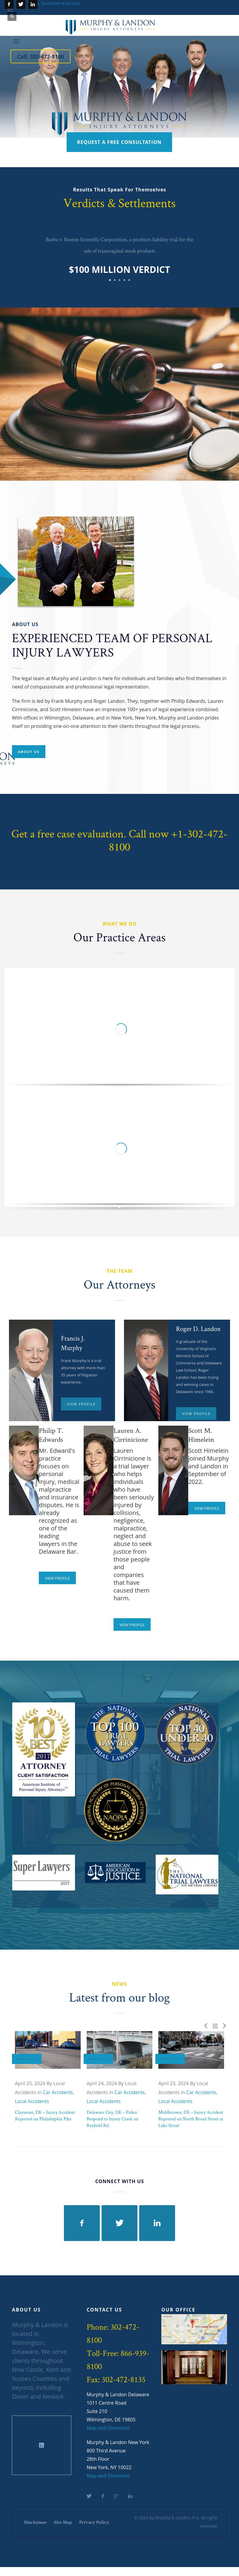 Murphy & Landon - Wilmington DE Lawyers